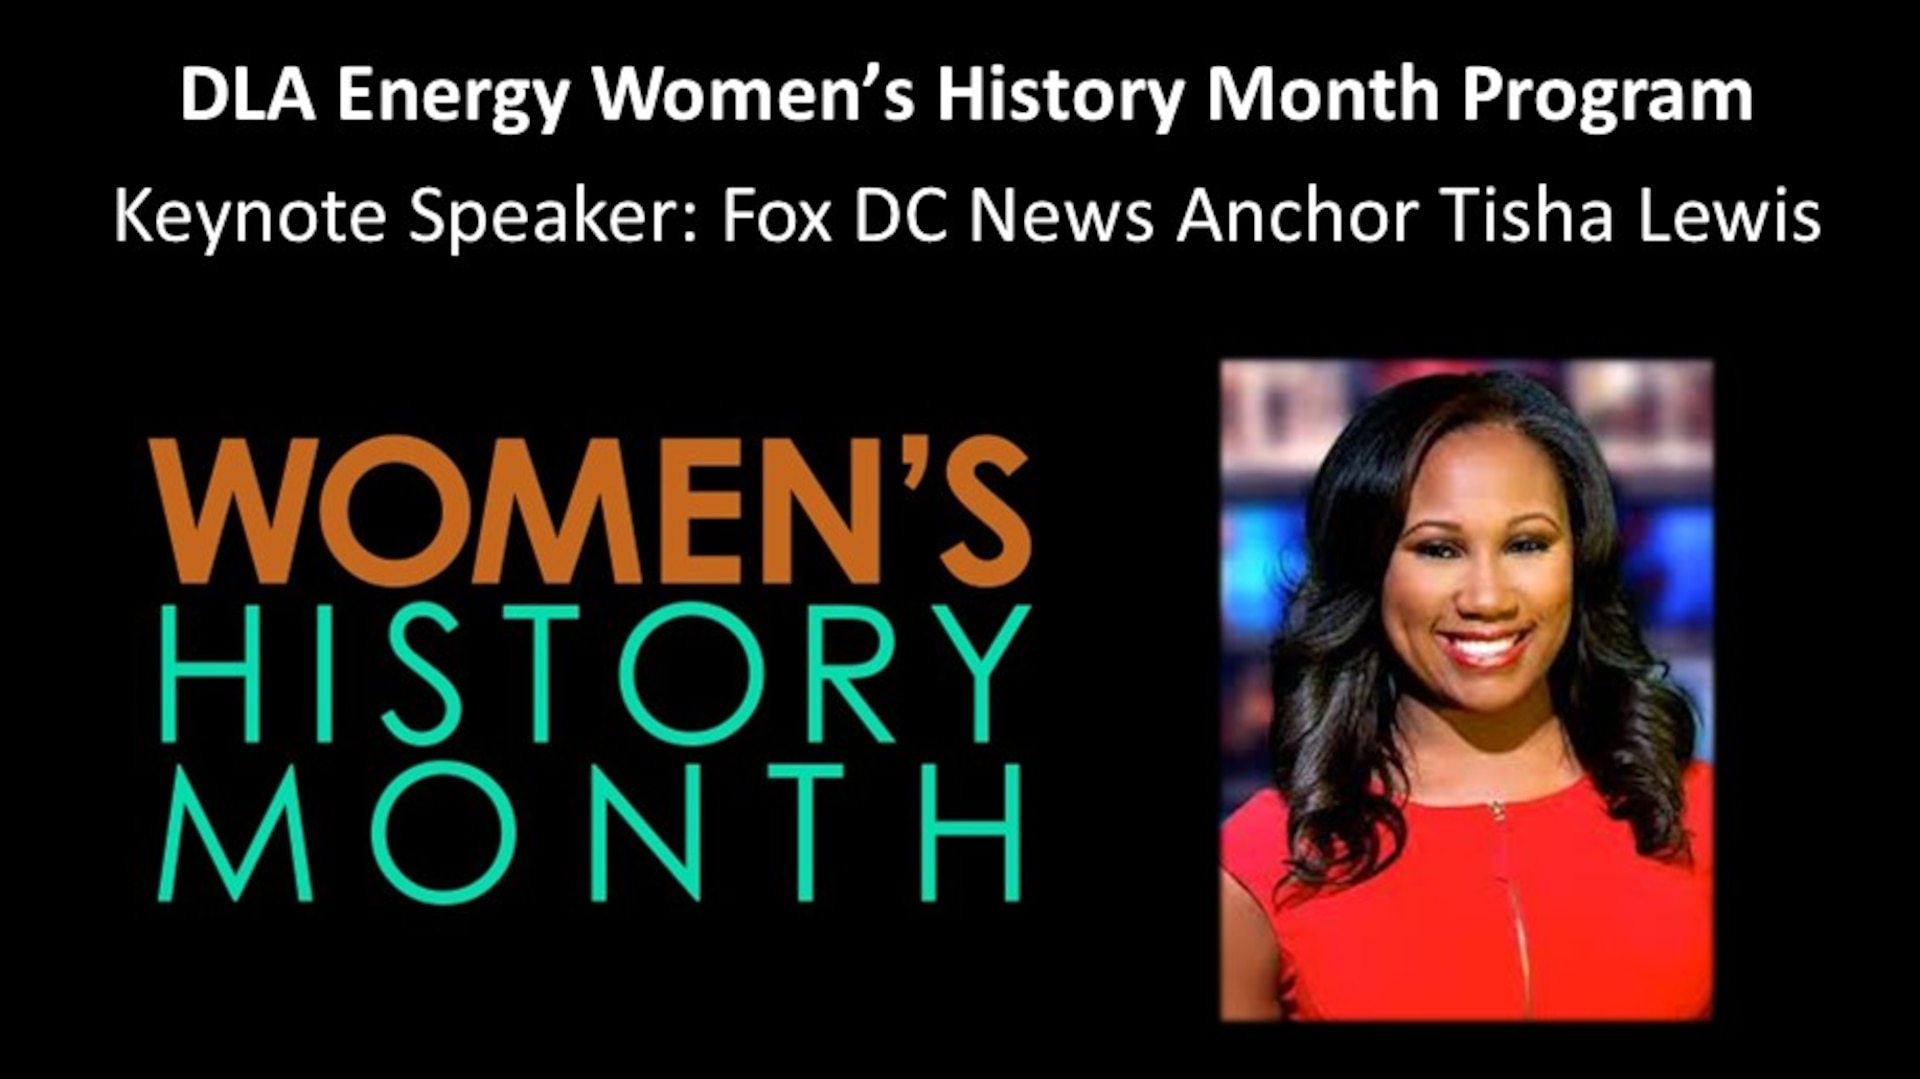 DLA Energy Acquisition Workforce Women’s History Month Program with keynote speaker Fox DC News Anchor Tisha Lewis.